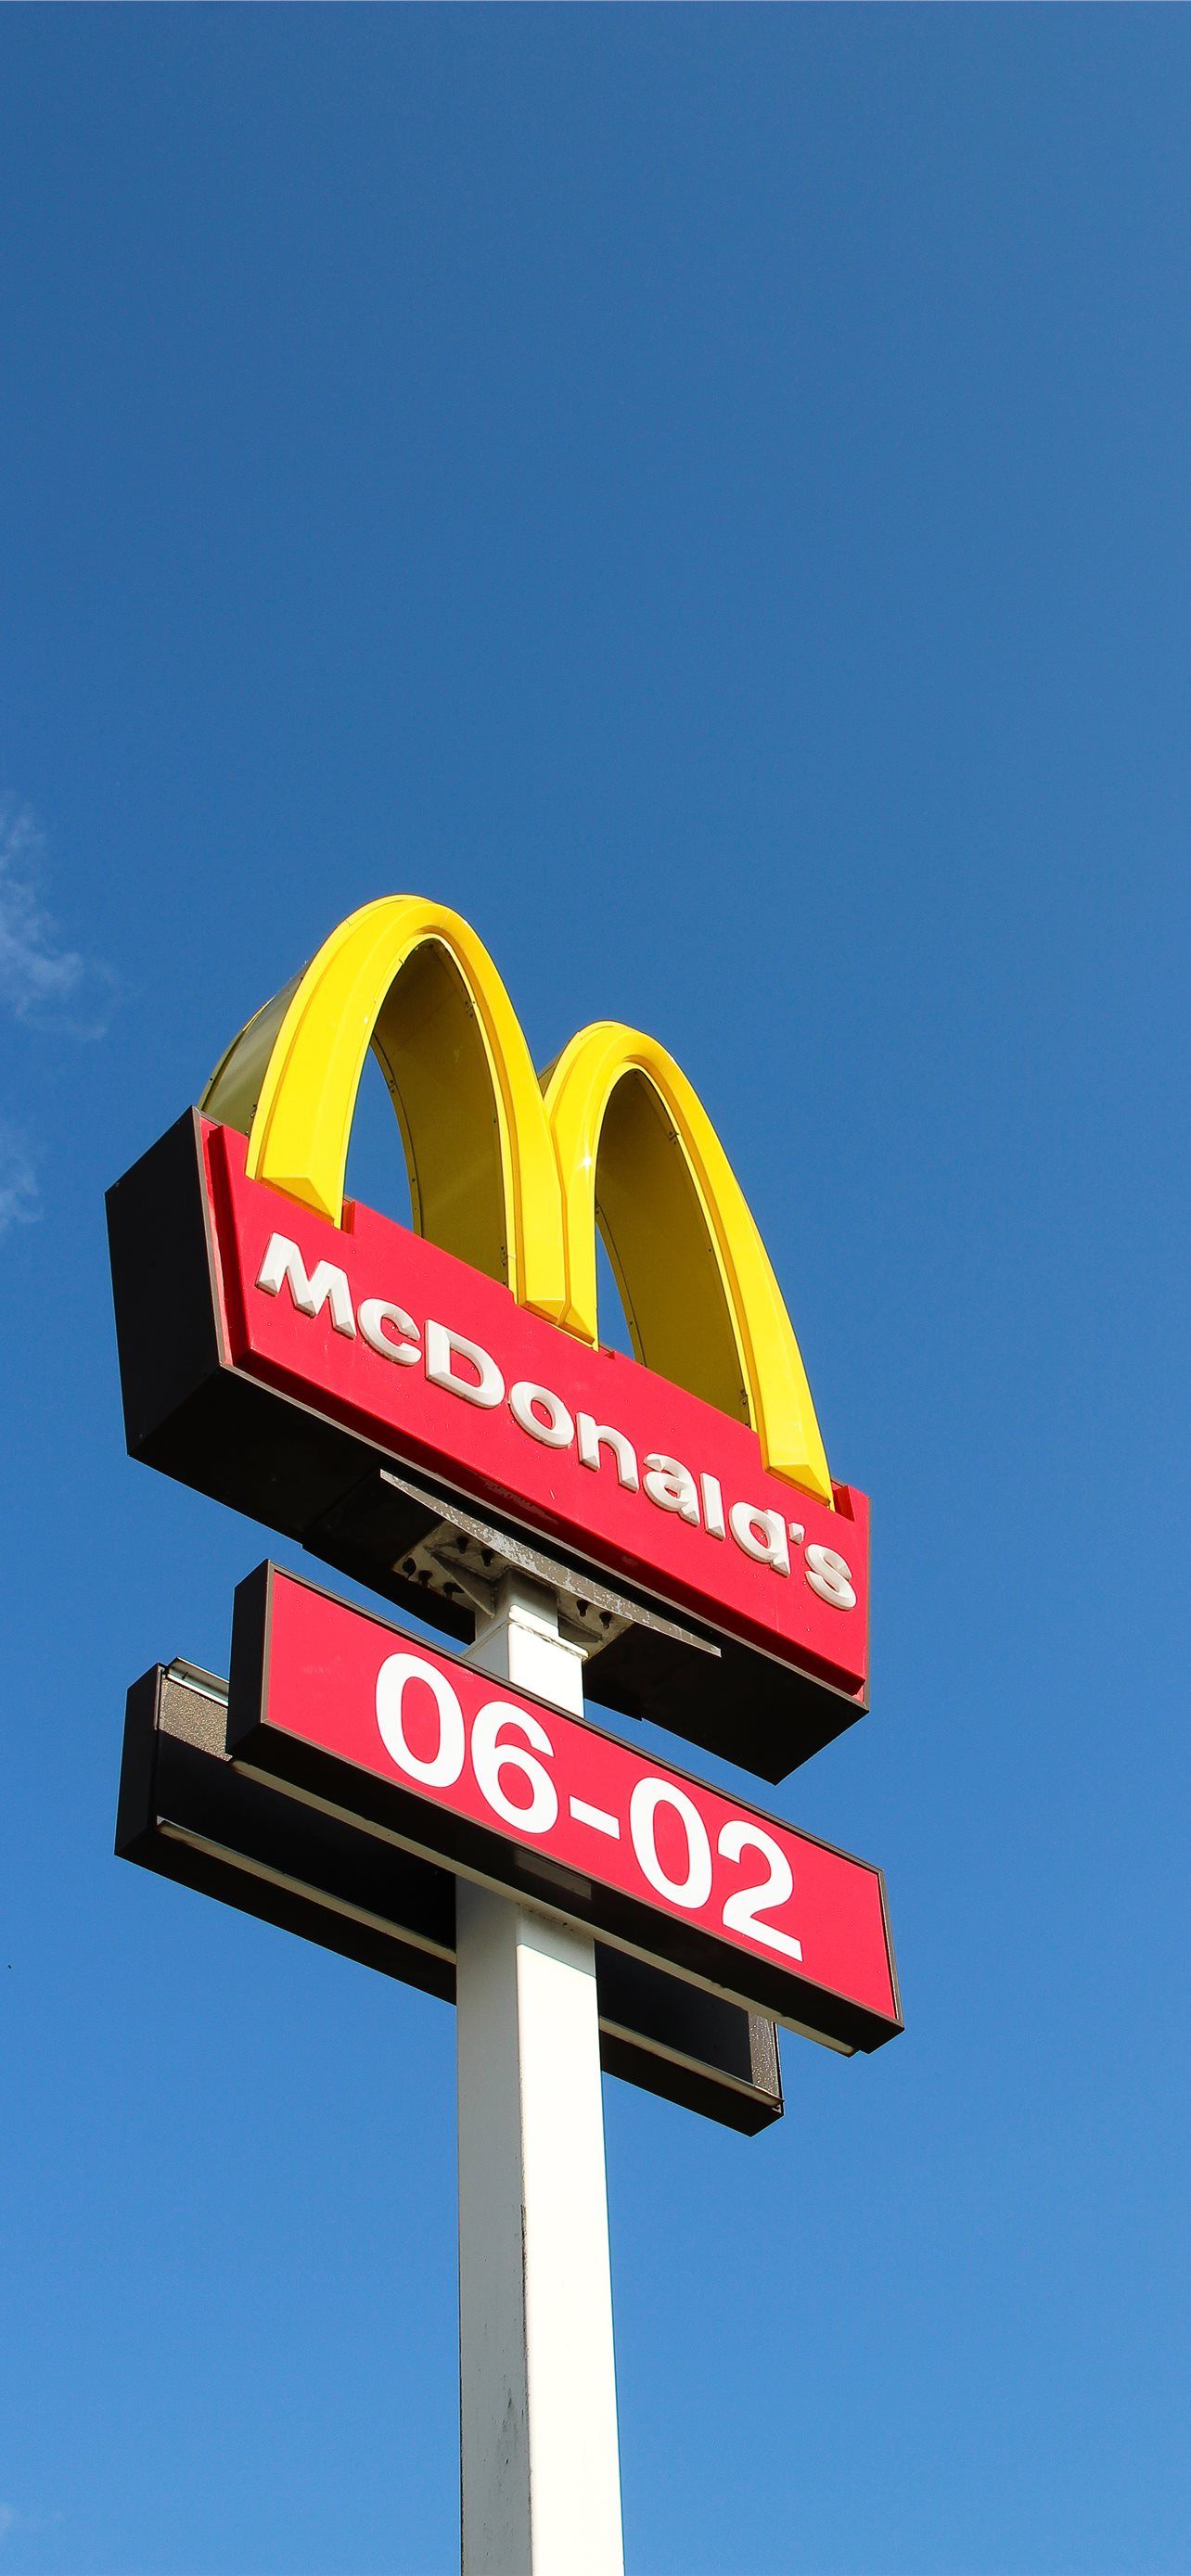  McDonald's Hintergrundbild 1284x2778. sky skylt stuff advertising mcdonalds signage str. iPhone Wallpaper Free Download